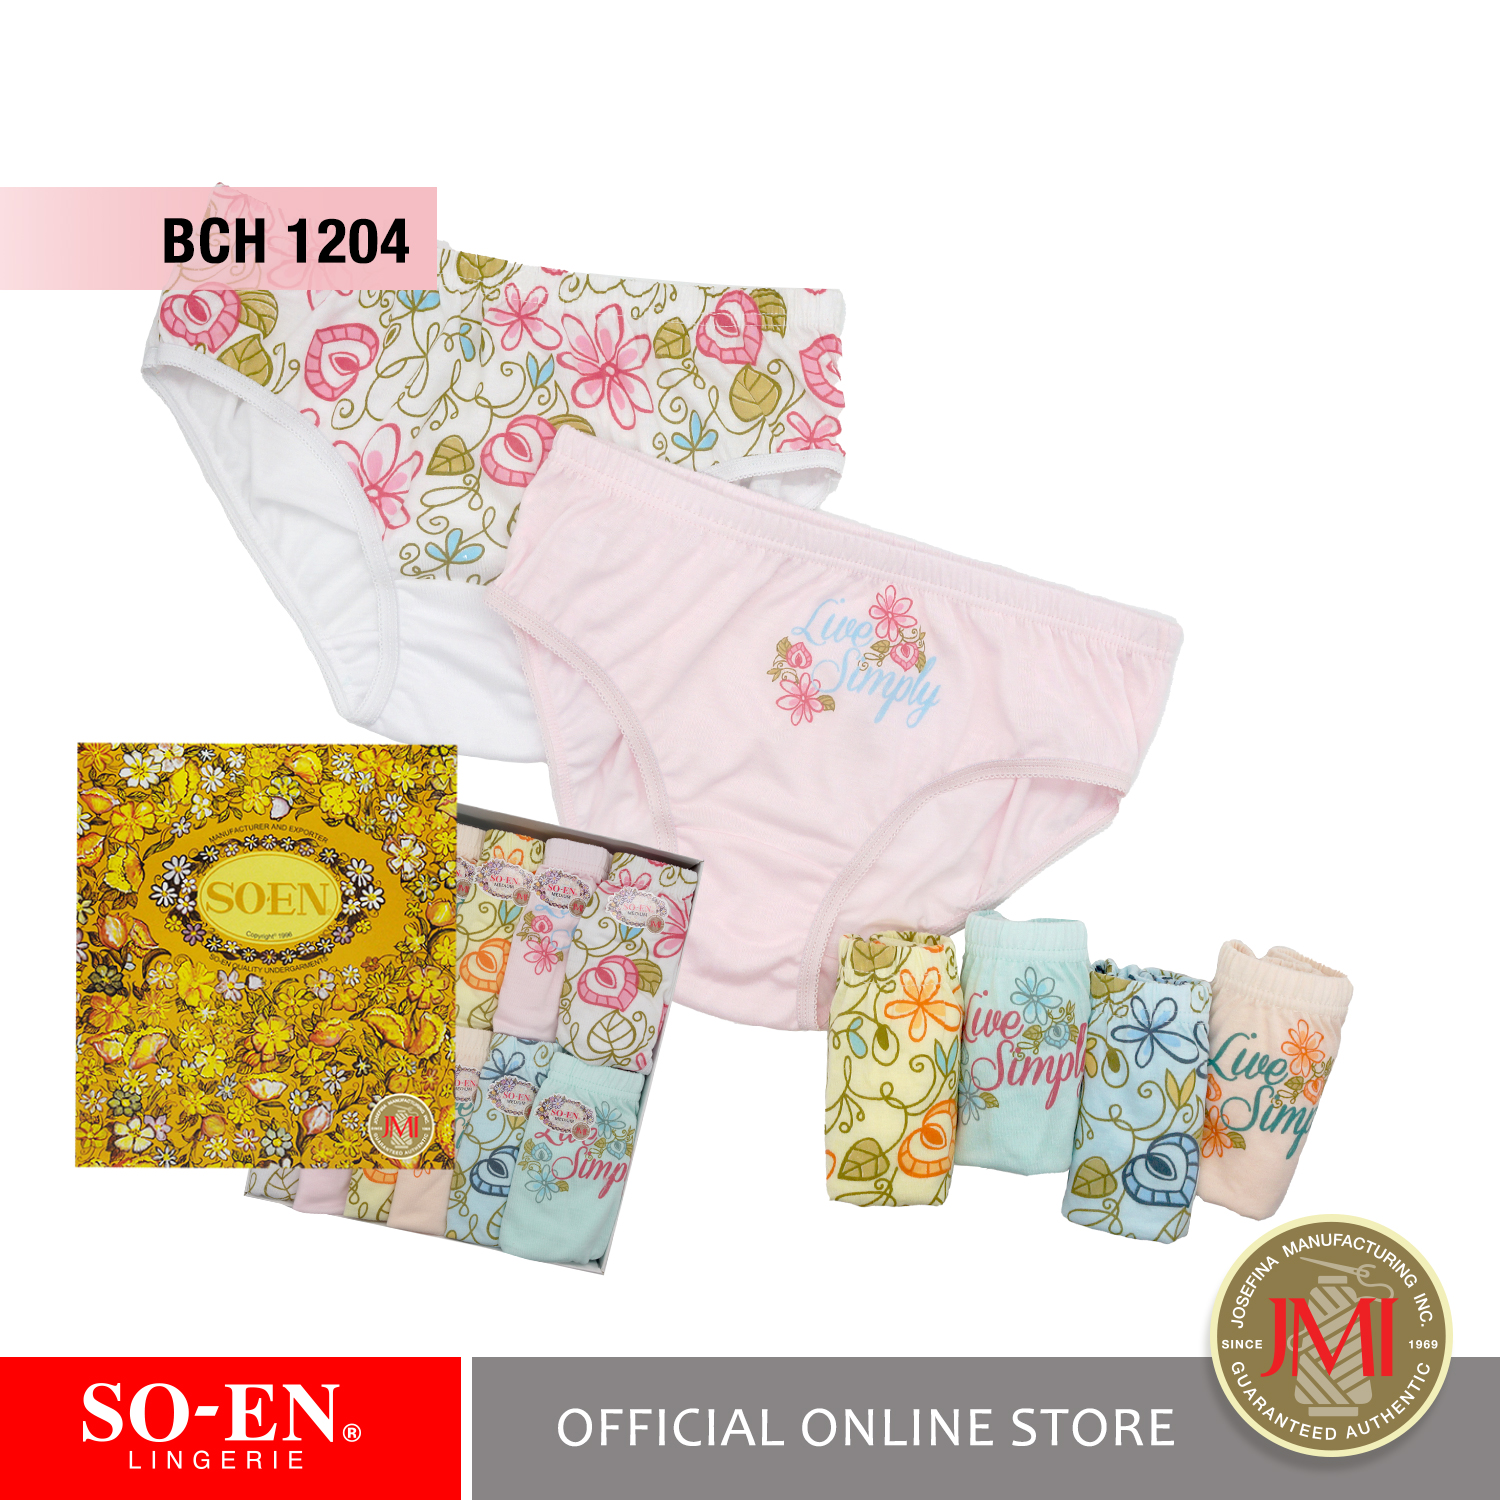 Buy Soen Embroidery online